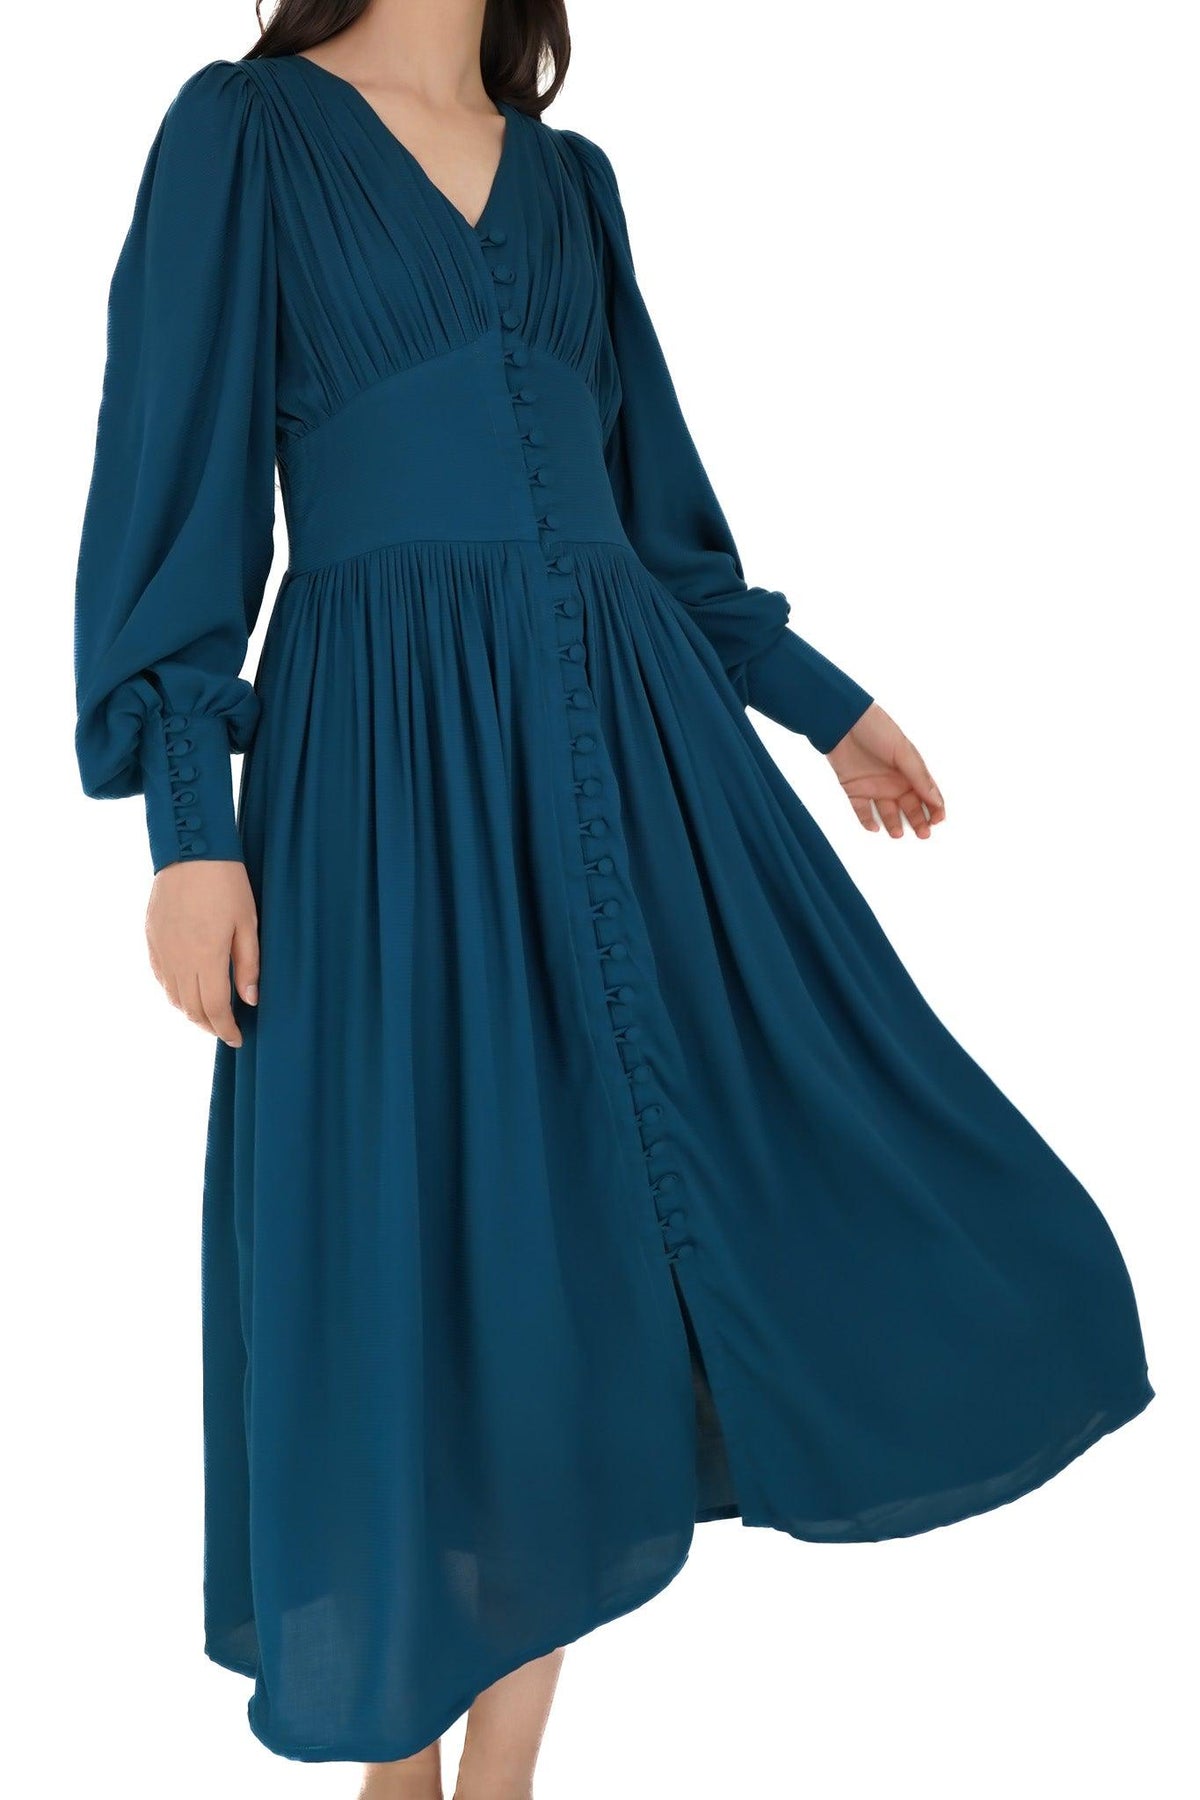 Shaukeen Indigo Blue Buttoned Front Midi Dress with Long Sleeves - TAHLIRA